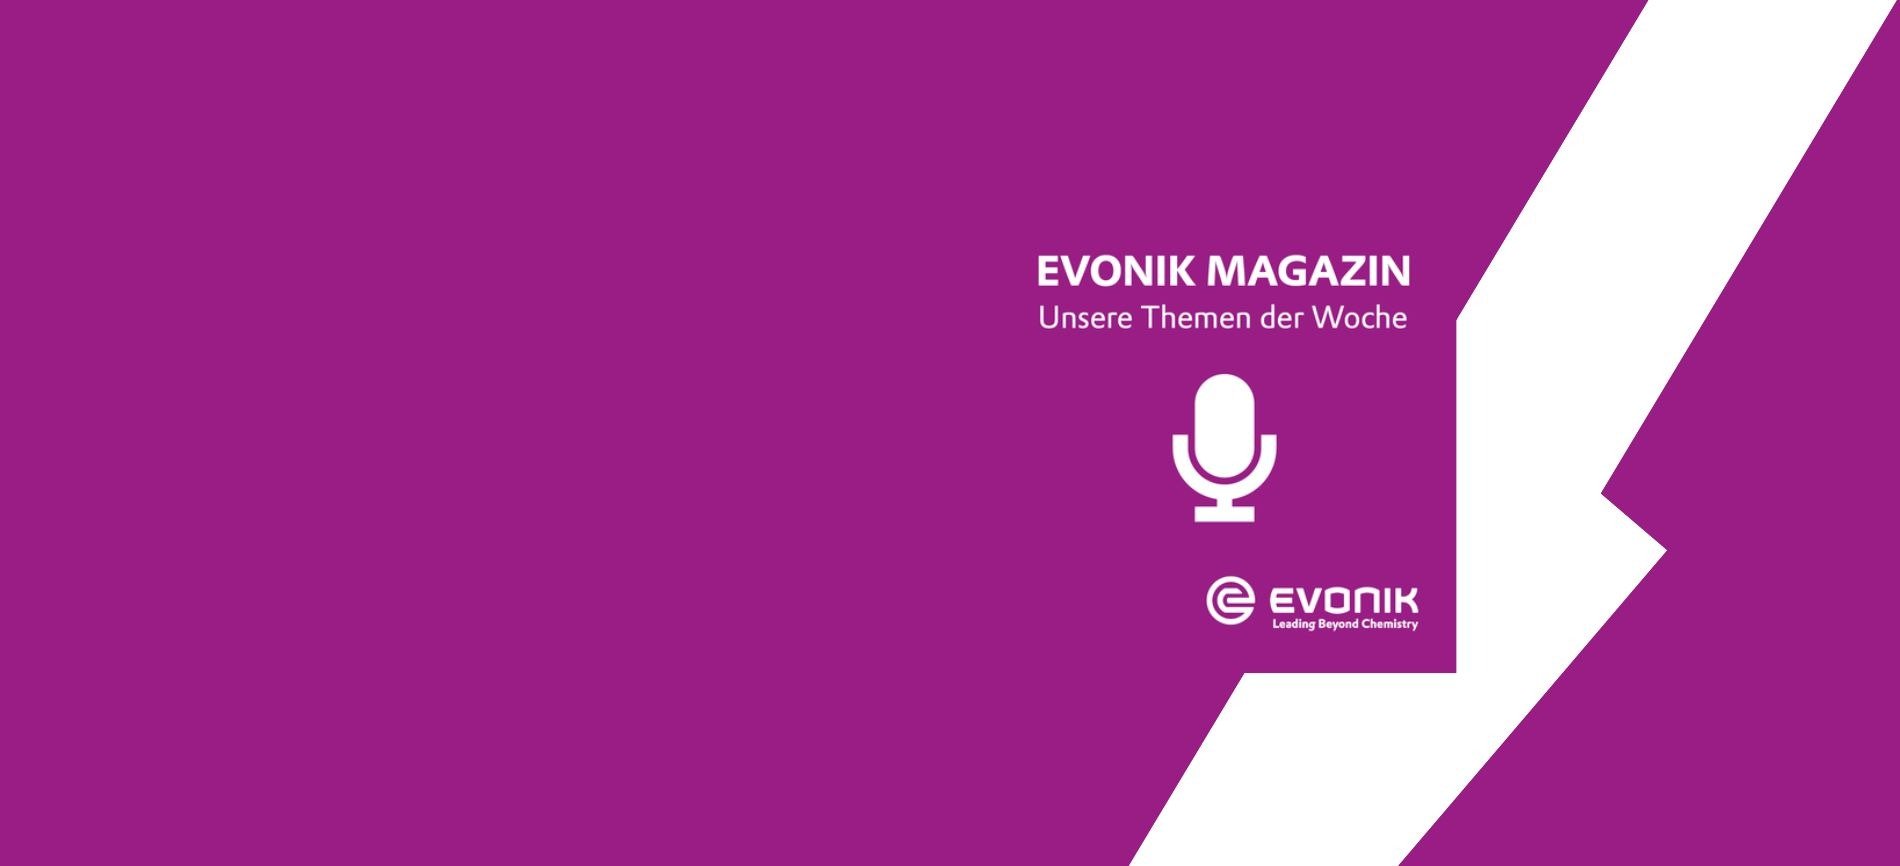 Evonik Magazin - der Podcast